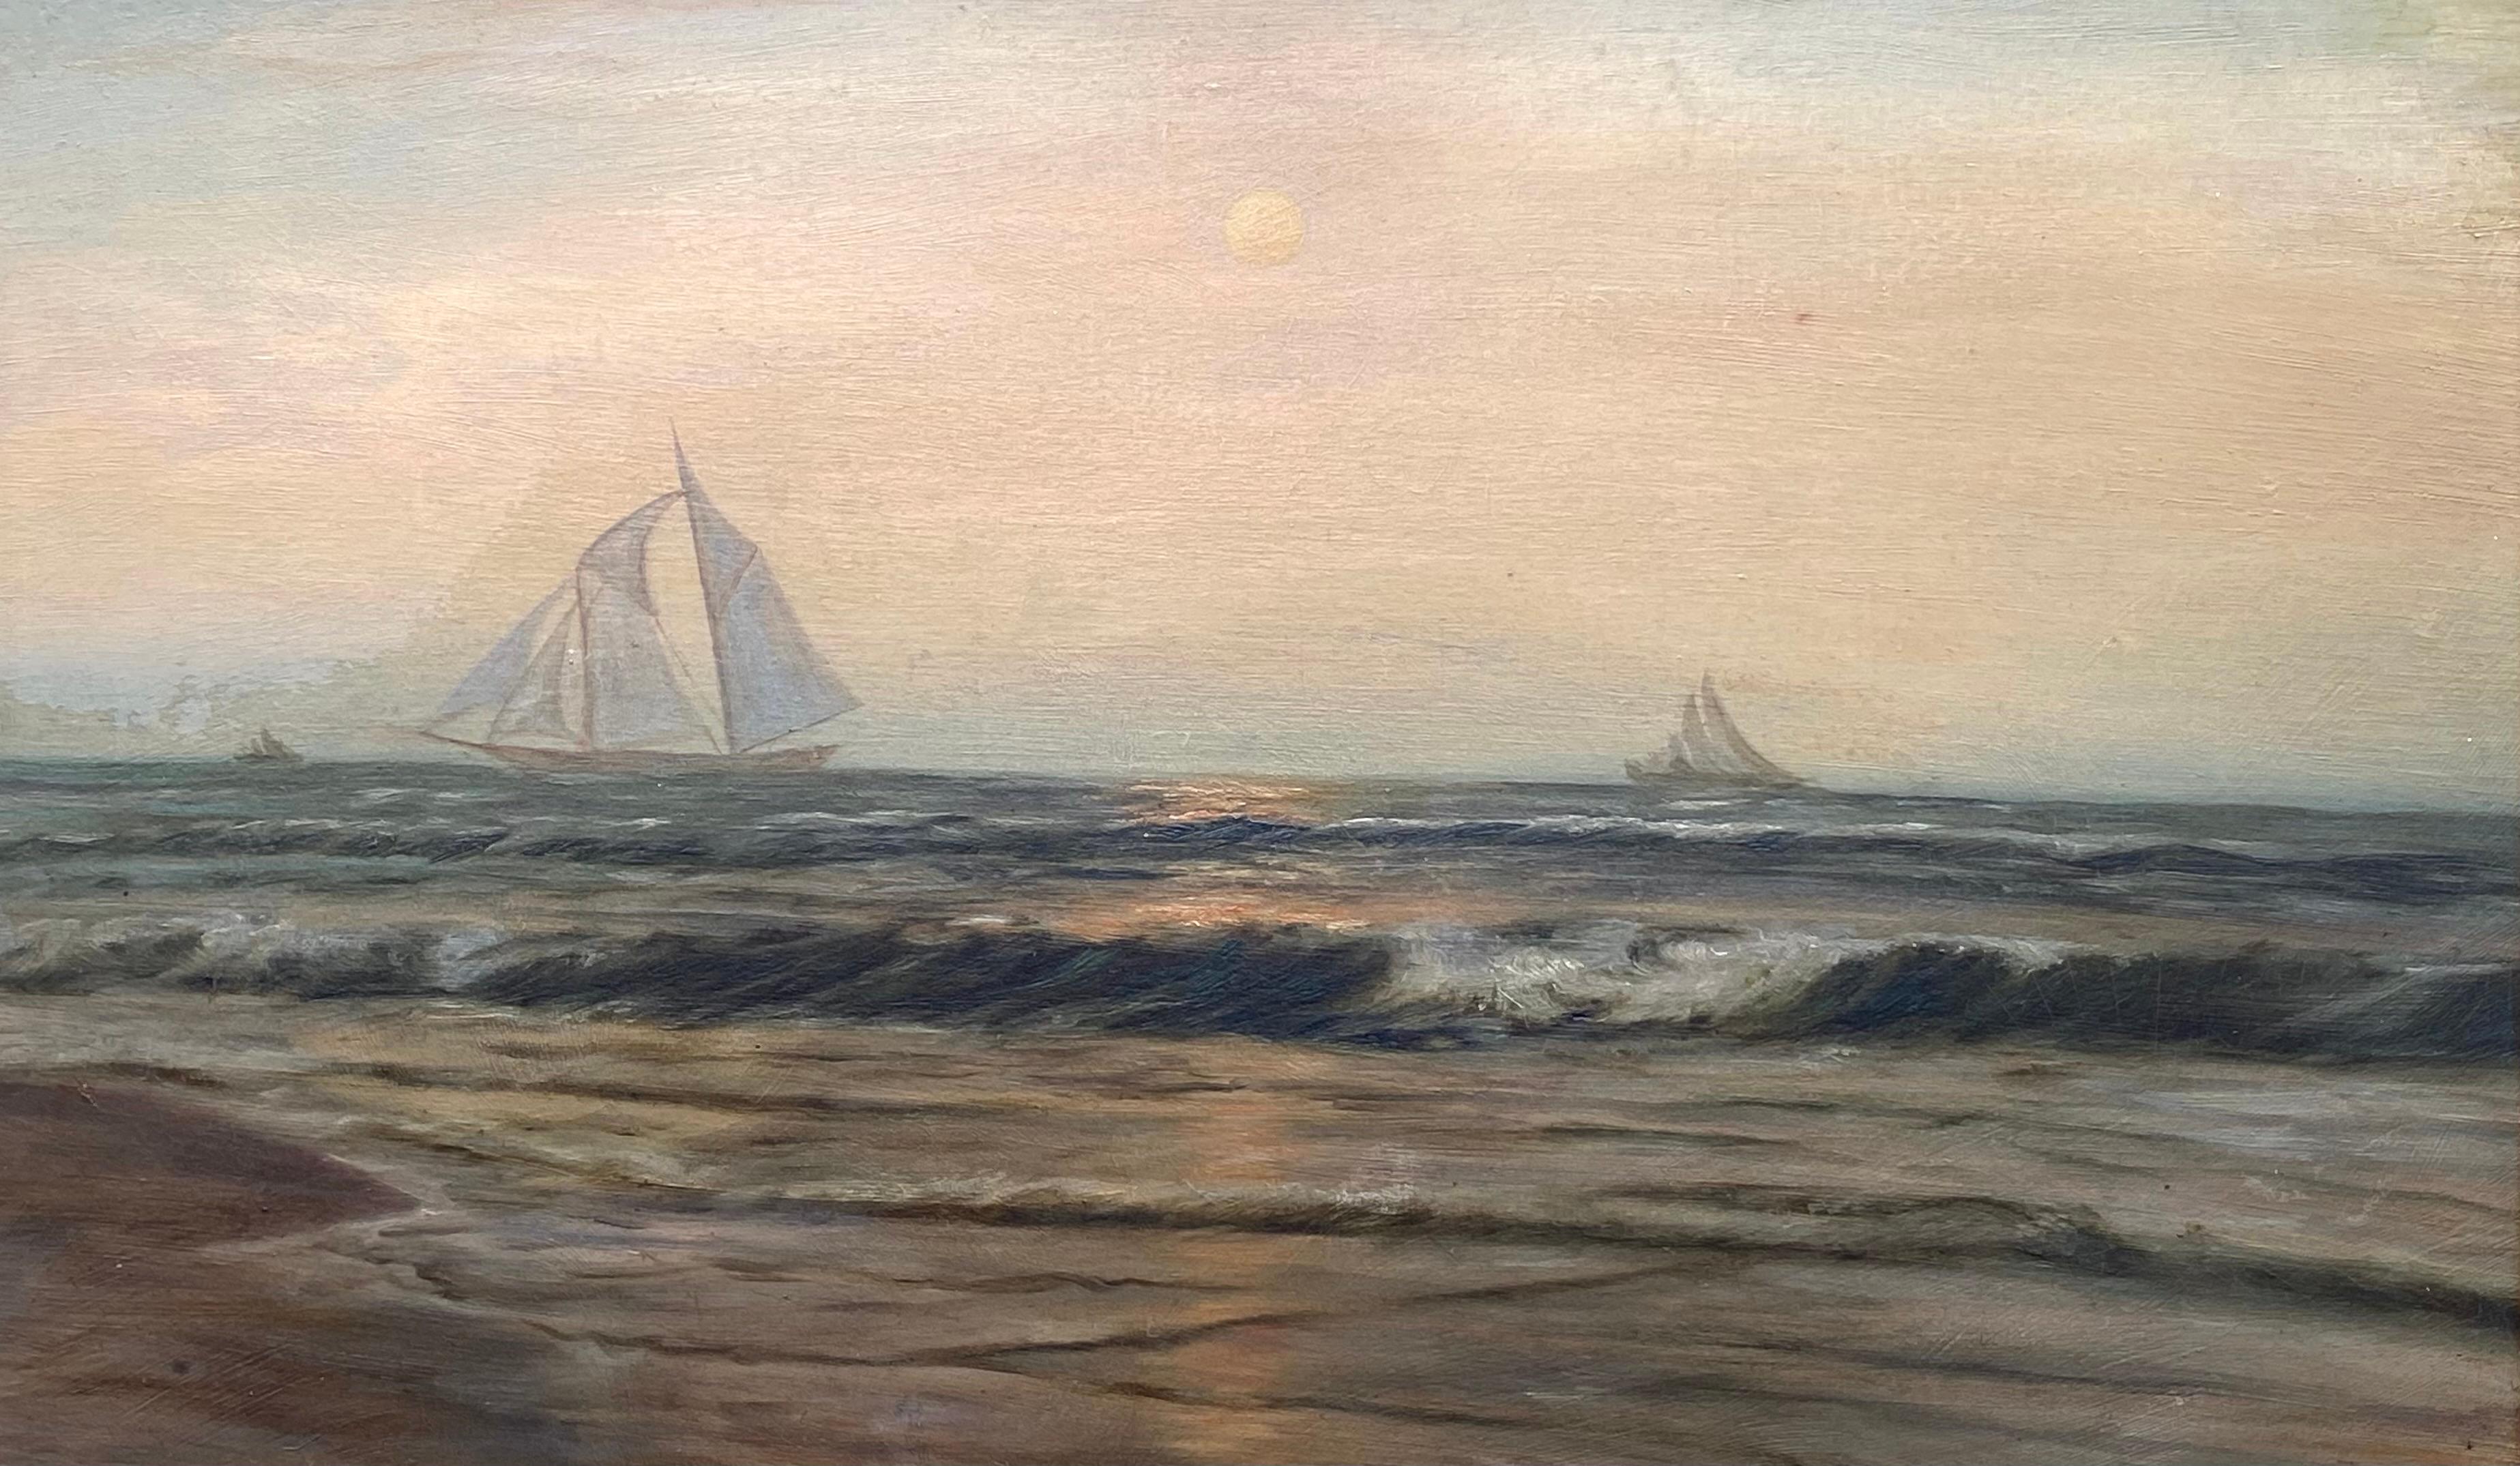 Franklin D. Briscoe Landscape Painting - “Sailboats off the Coast”